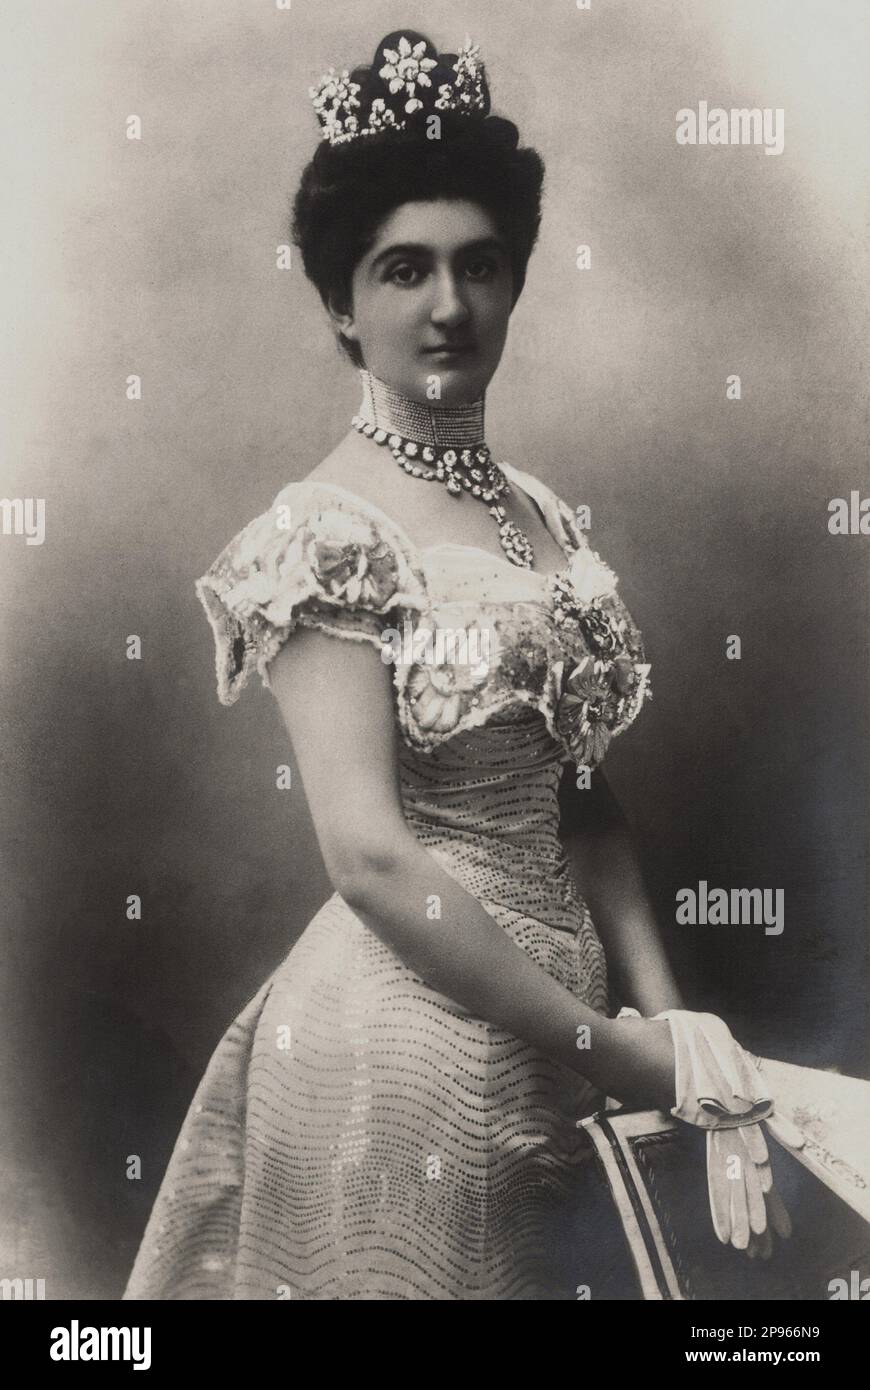 Ca. 1900 , ITALIEN : die Königin von Italien ELENA ( Helene von Montenegro , 1873 - 1952 ) im offiziellen Porträt . - CASA SAVOIA - ITALIA - REALI - Nobiltà ITALIANA - ADEL - ADEL - GESCHICHTE - FOTO STORICHE - gioiello - gioielli - Juwelen - Schmuck - collana di diamanti - Diamante - Diamantenhalskette - Diamant - Corona - Diadema - Krone - Tiara - Scollatura - Nekkopening - Ausschnitt - Dekollete' - Diamante - Diamanten - pizzo - Spitze - spilla - Nadel - BELLE EPOQUE - Glover - Guanto - Guanti - Chignon --- Archivio GBB Stockfoto